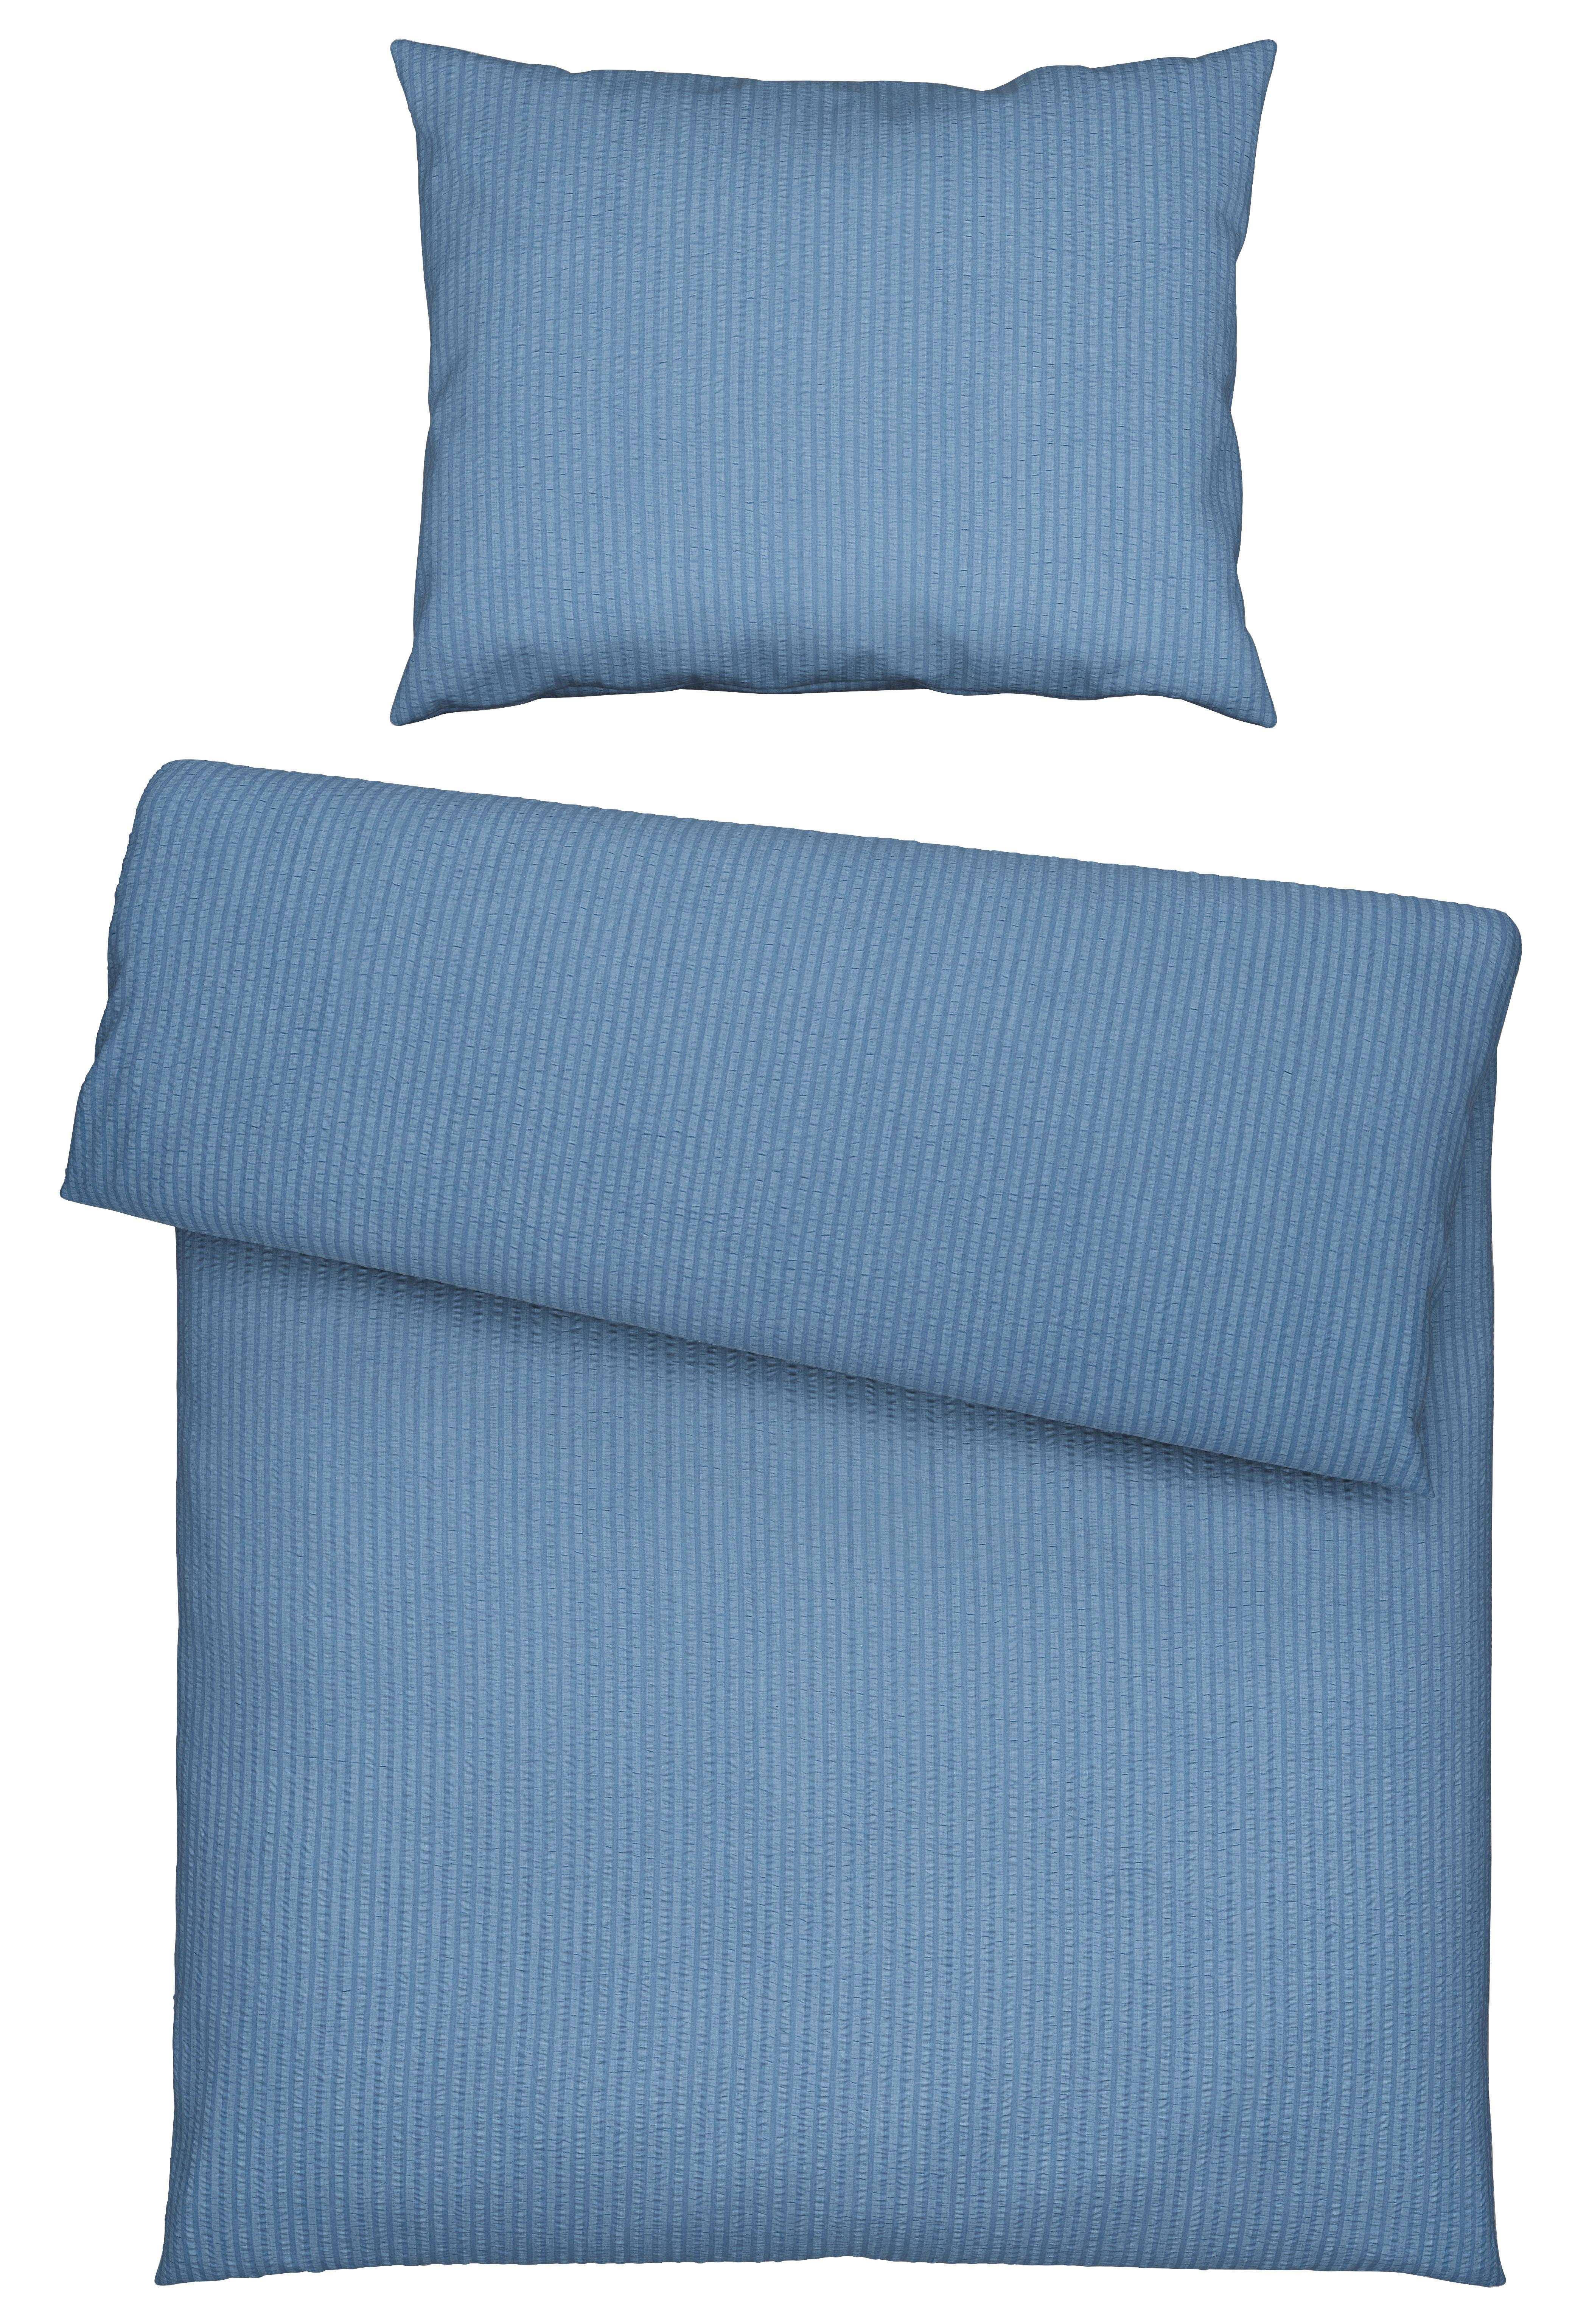 POŚCIEL BABS - niebieski, Modern, tkanina (140/200cm) - Modern Living